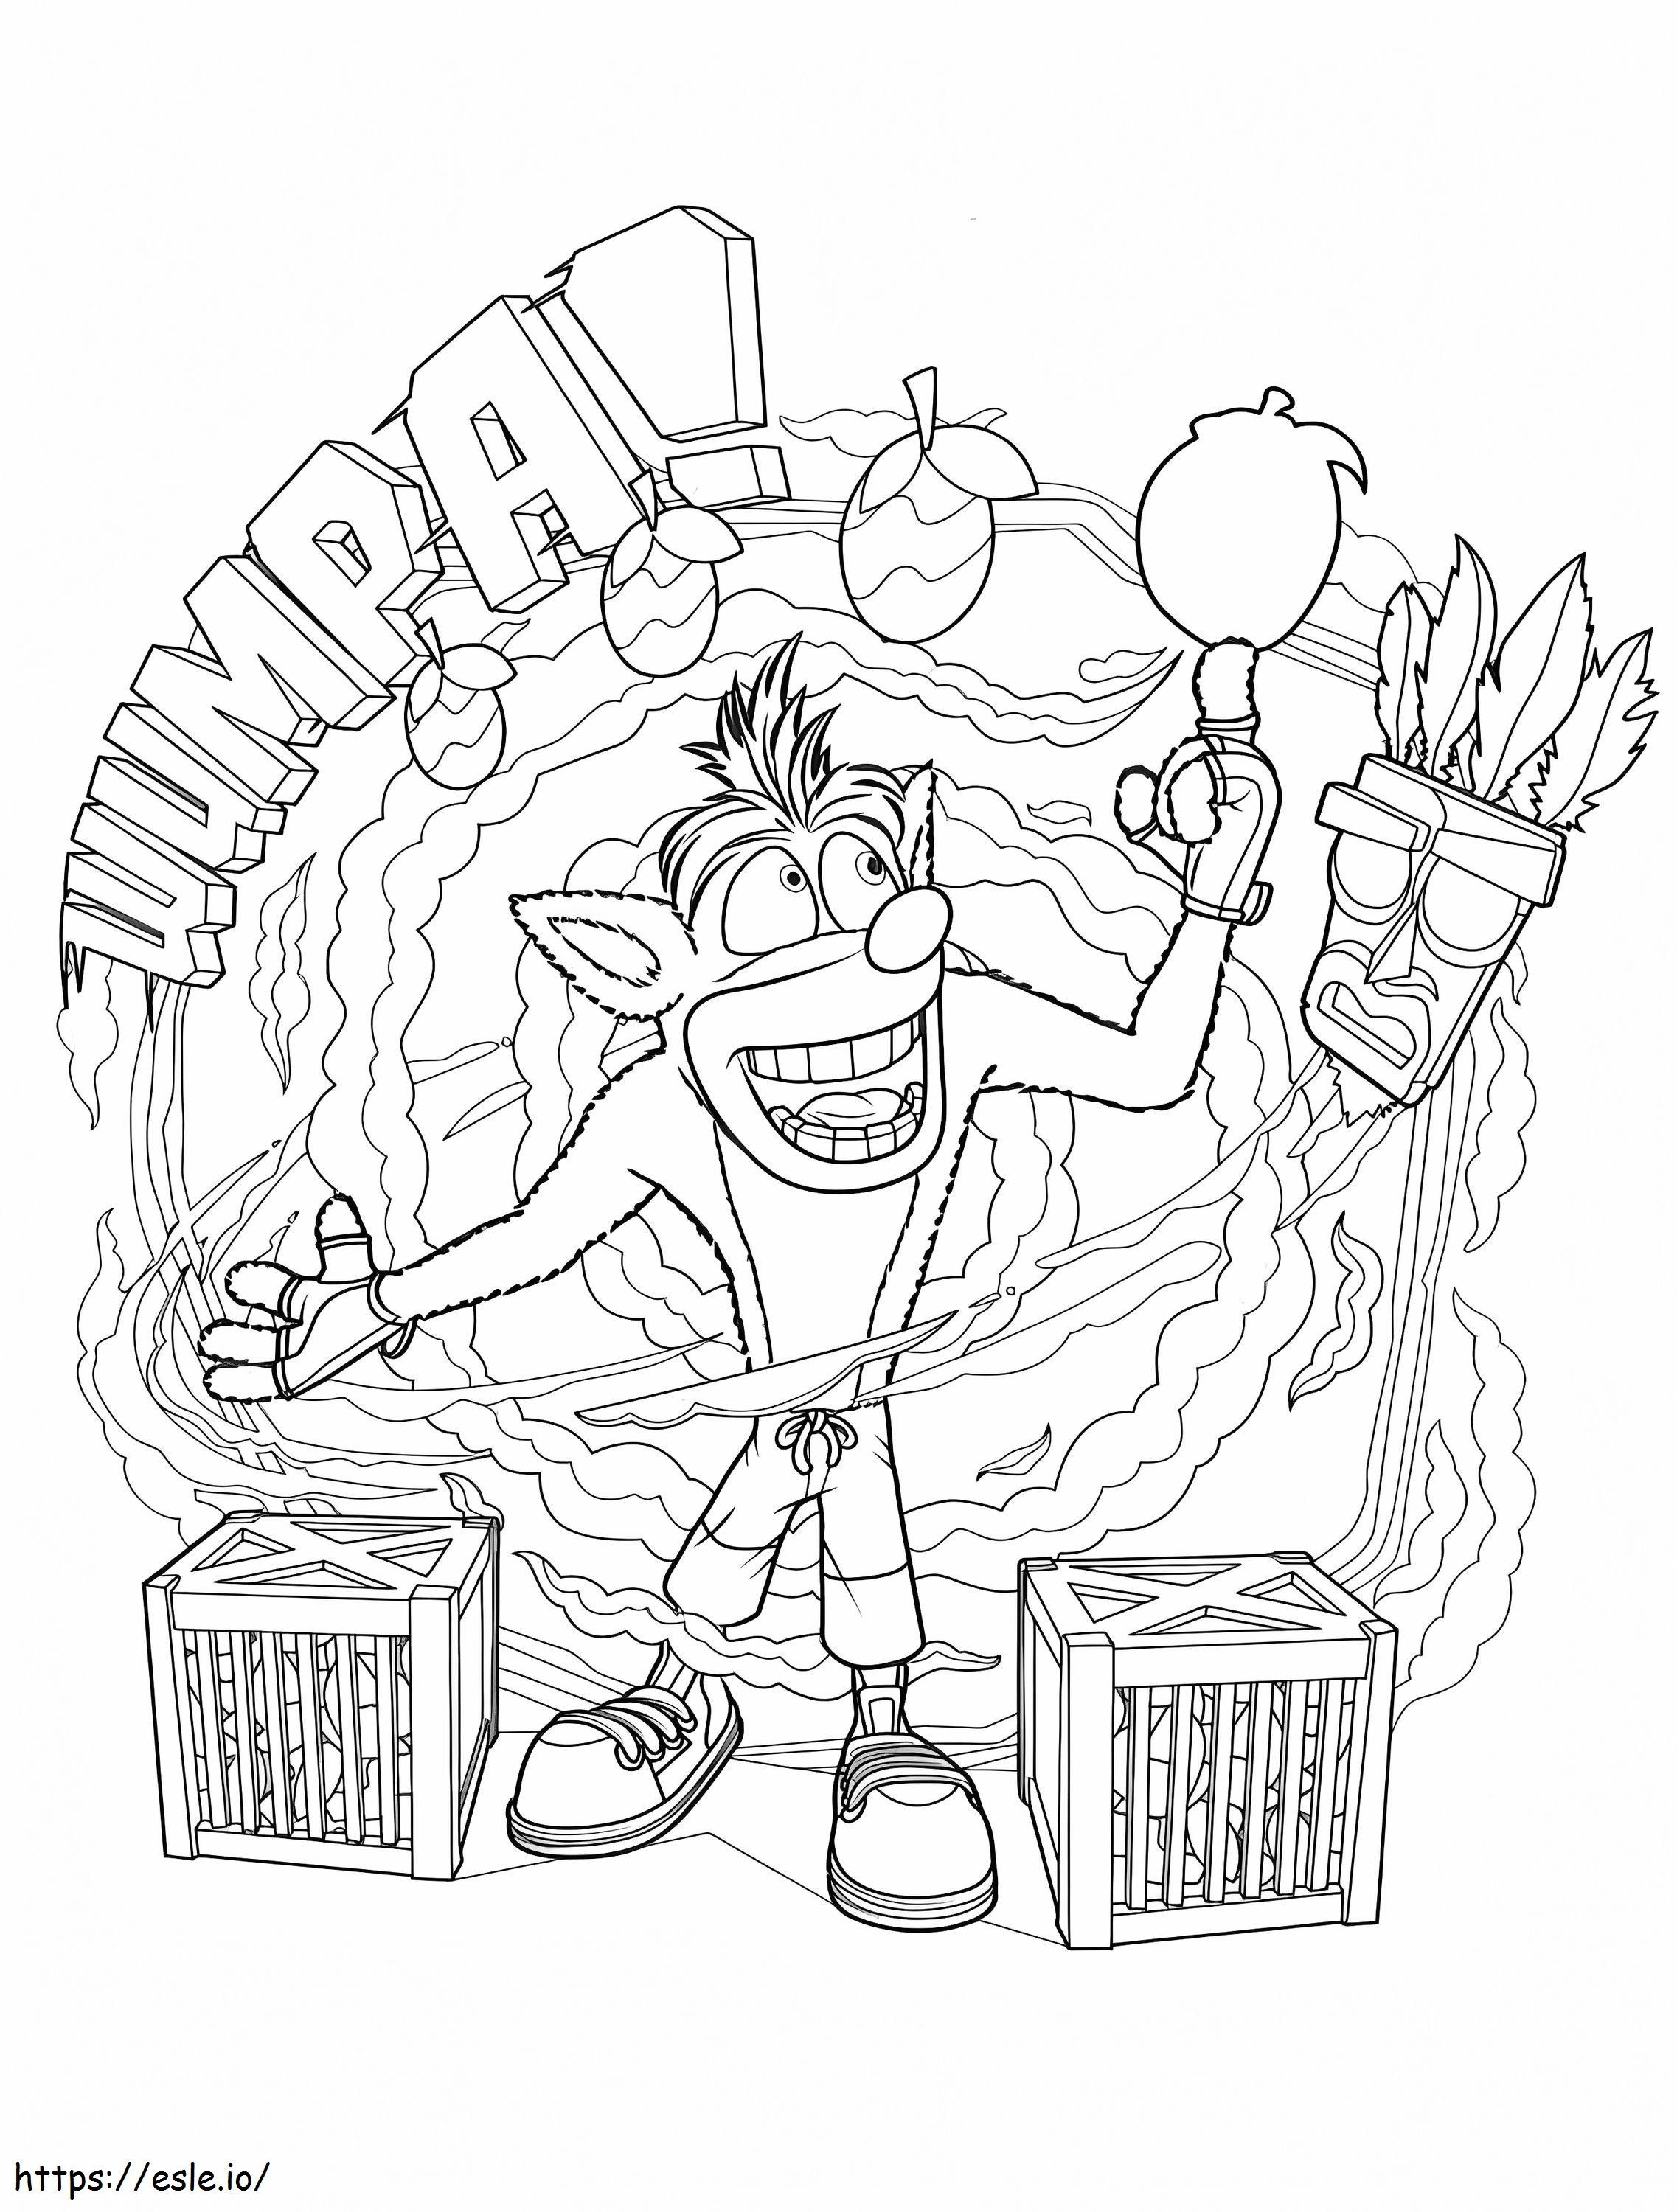 Crash Bandicoot 7 coloring page